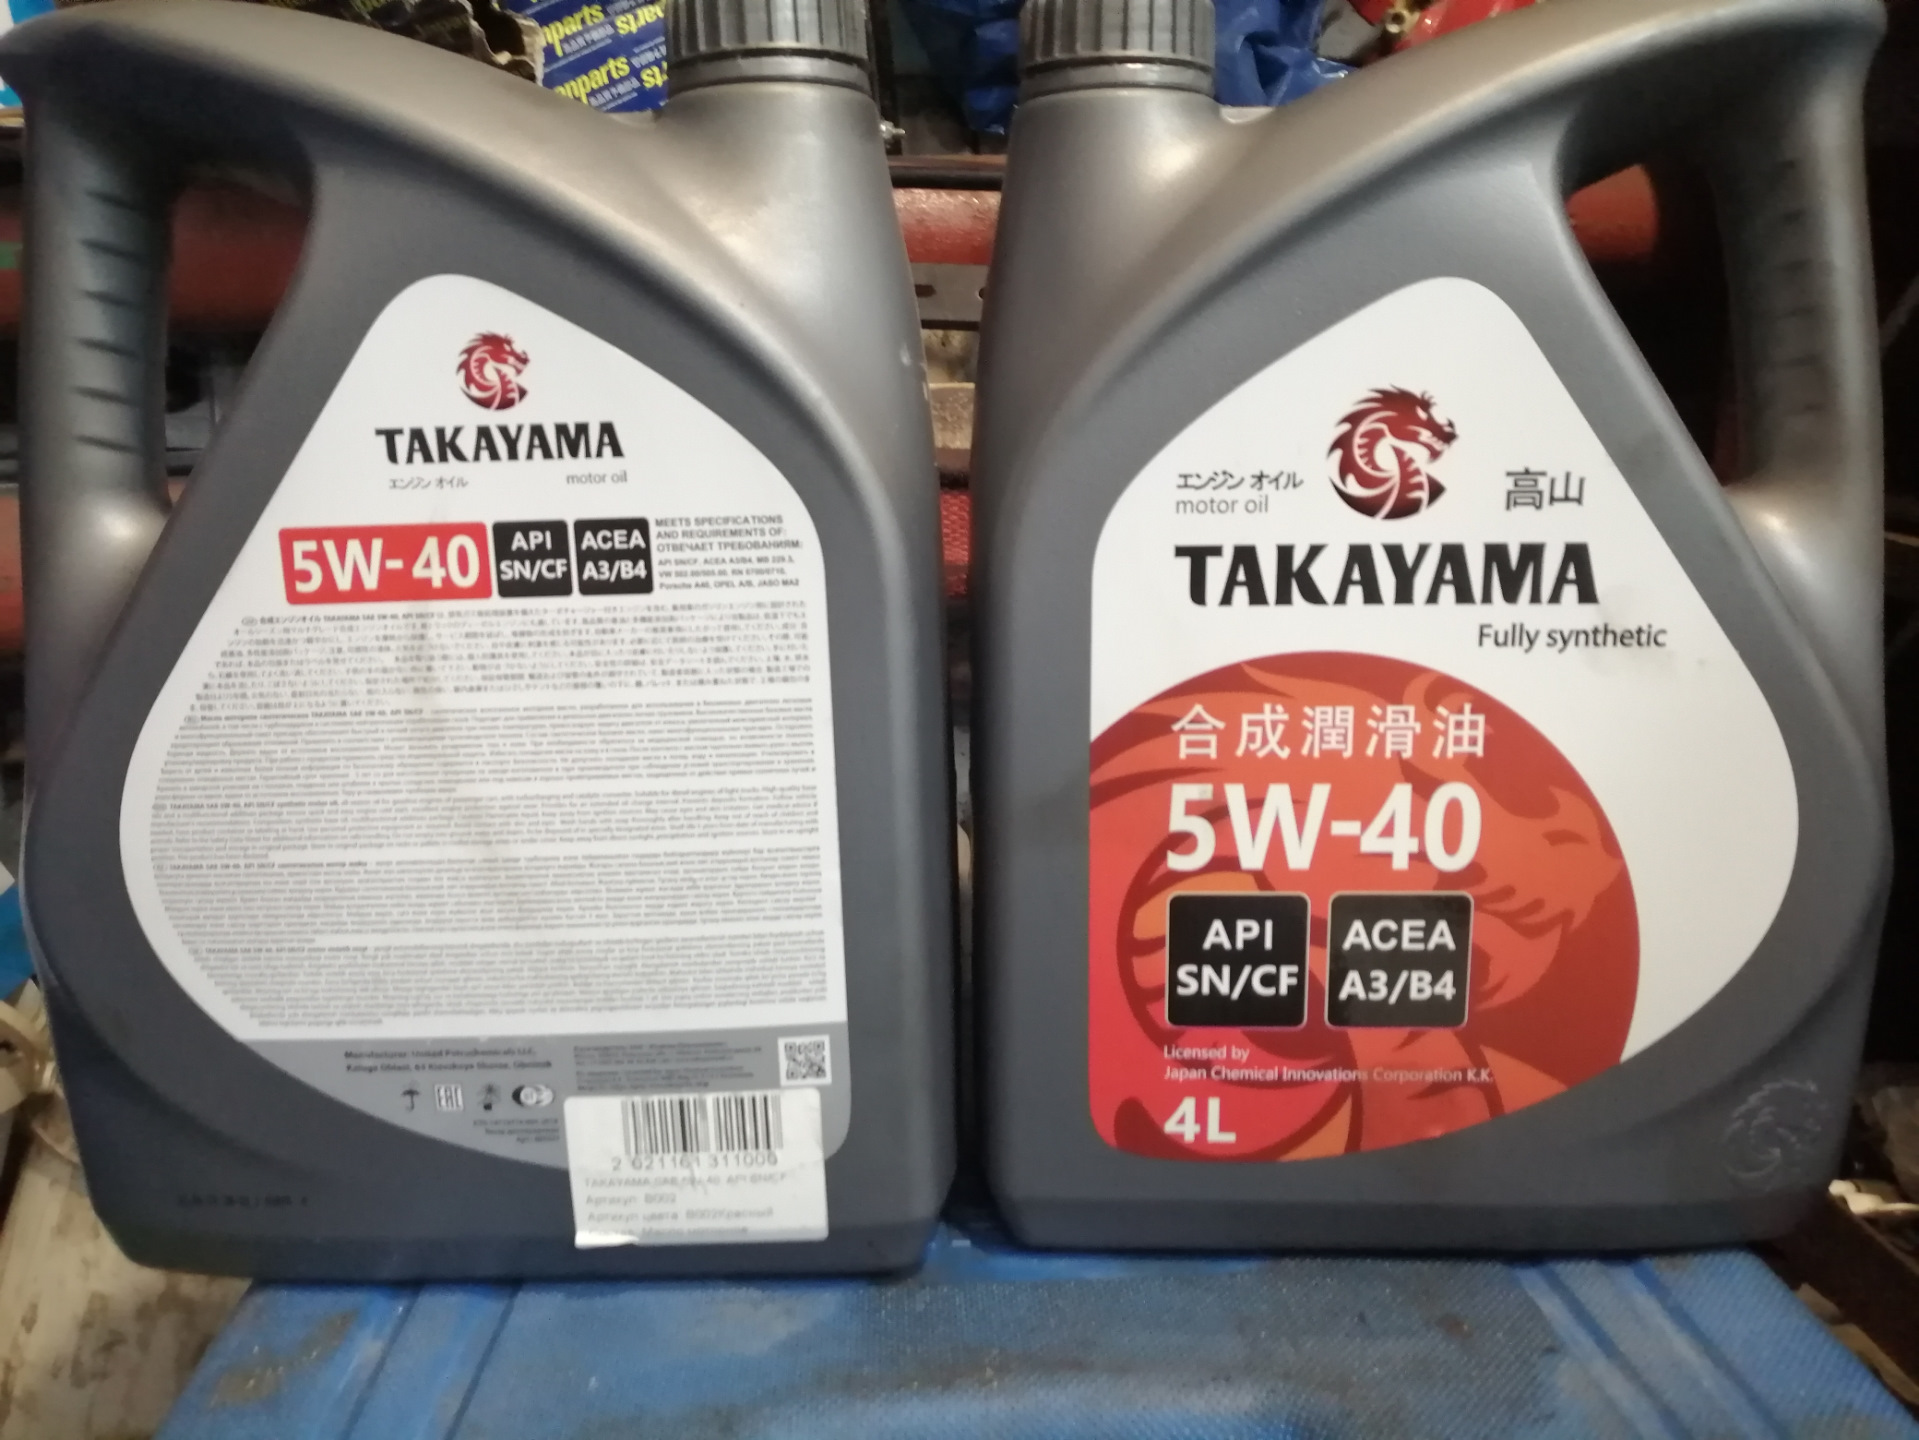 ZIK Lukoil Castrol. Масло эвотек 5w40 картинки. Takayama масло реклама. Takayama Oil.